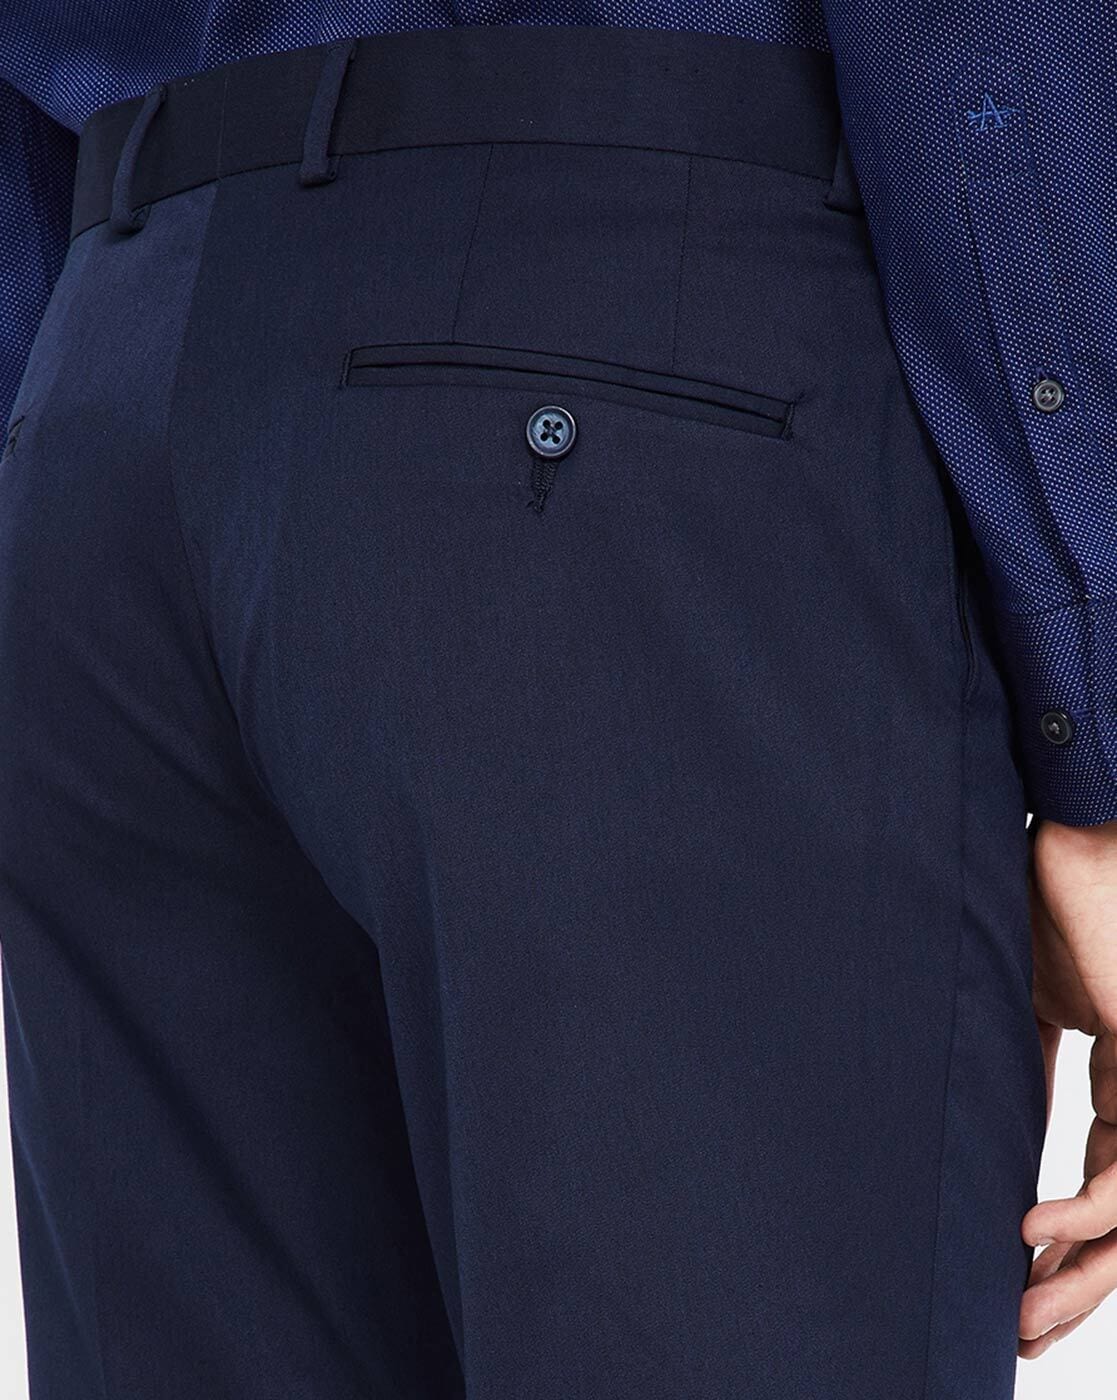 Formal Trouser Browse Men Navy Blue Cotton Blend Formal Trouser on Cliths